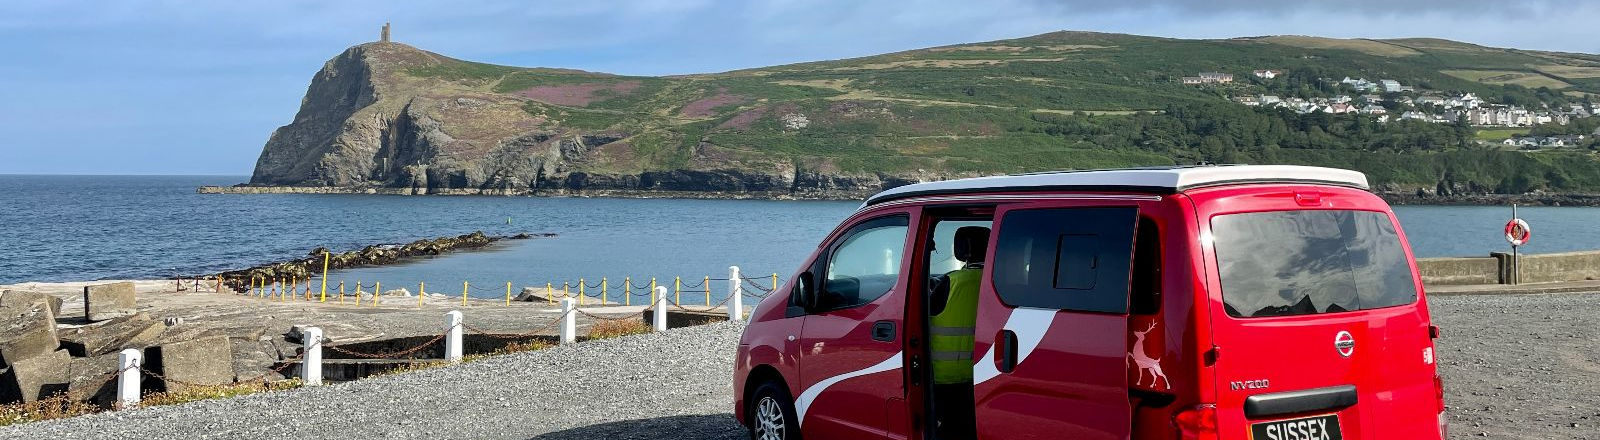 red campervan parked in Isle of Man